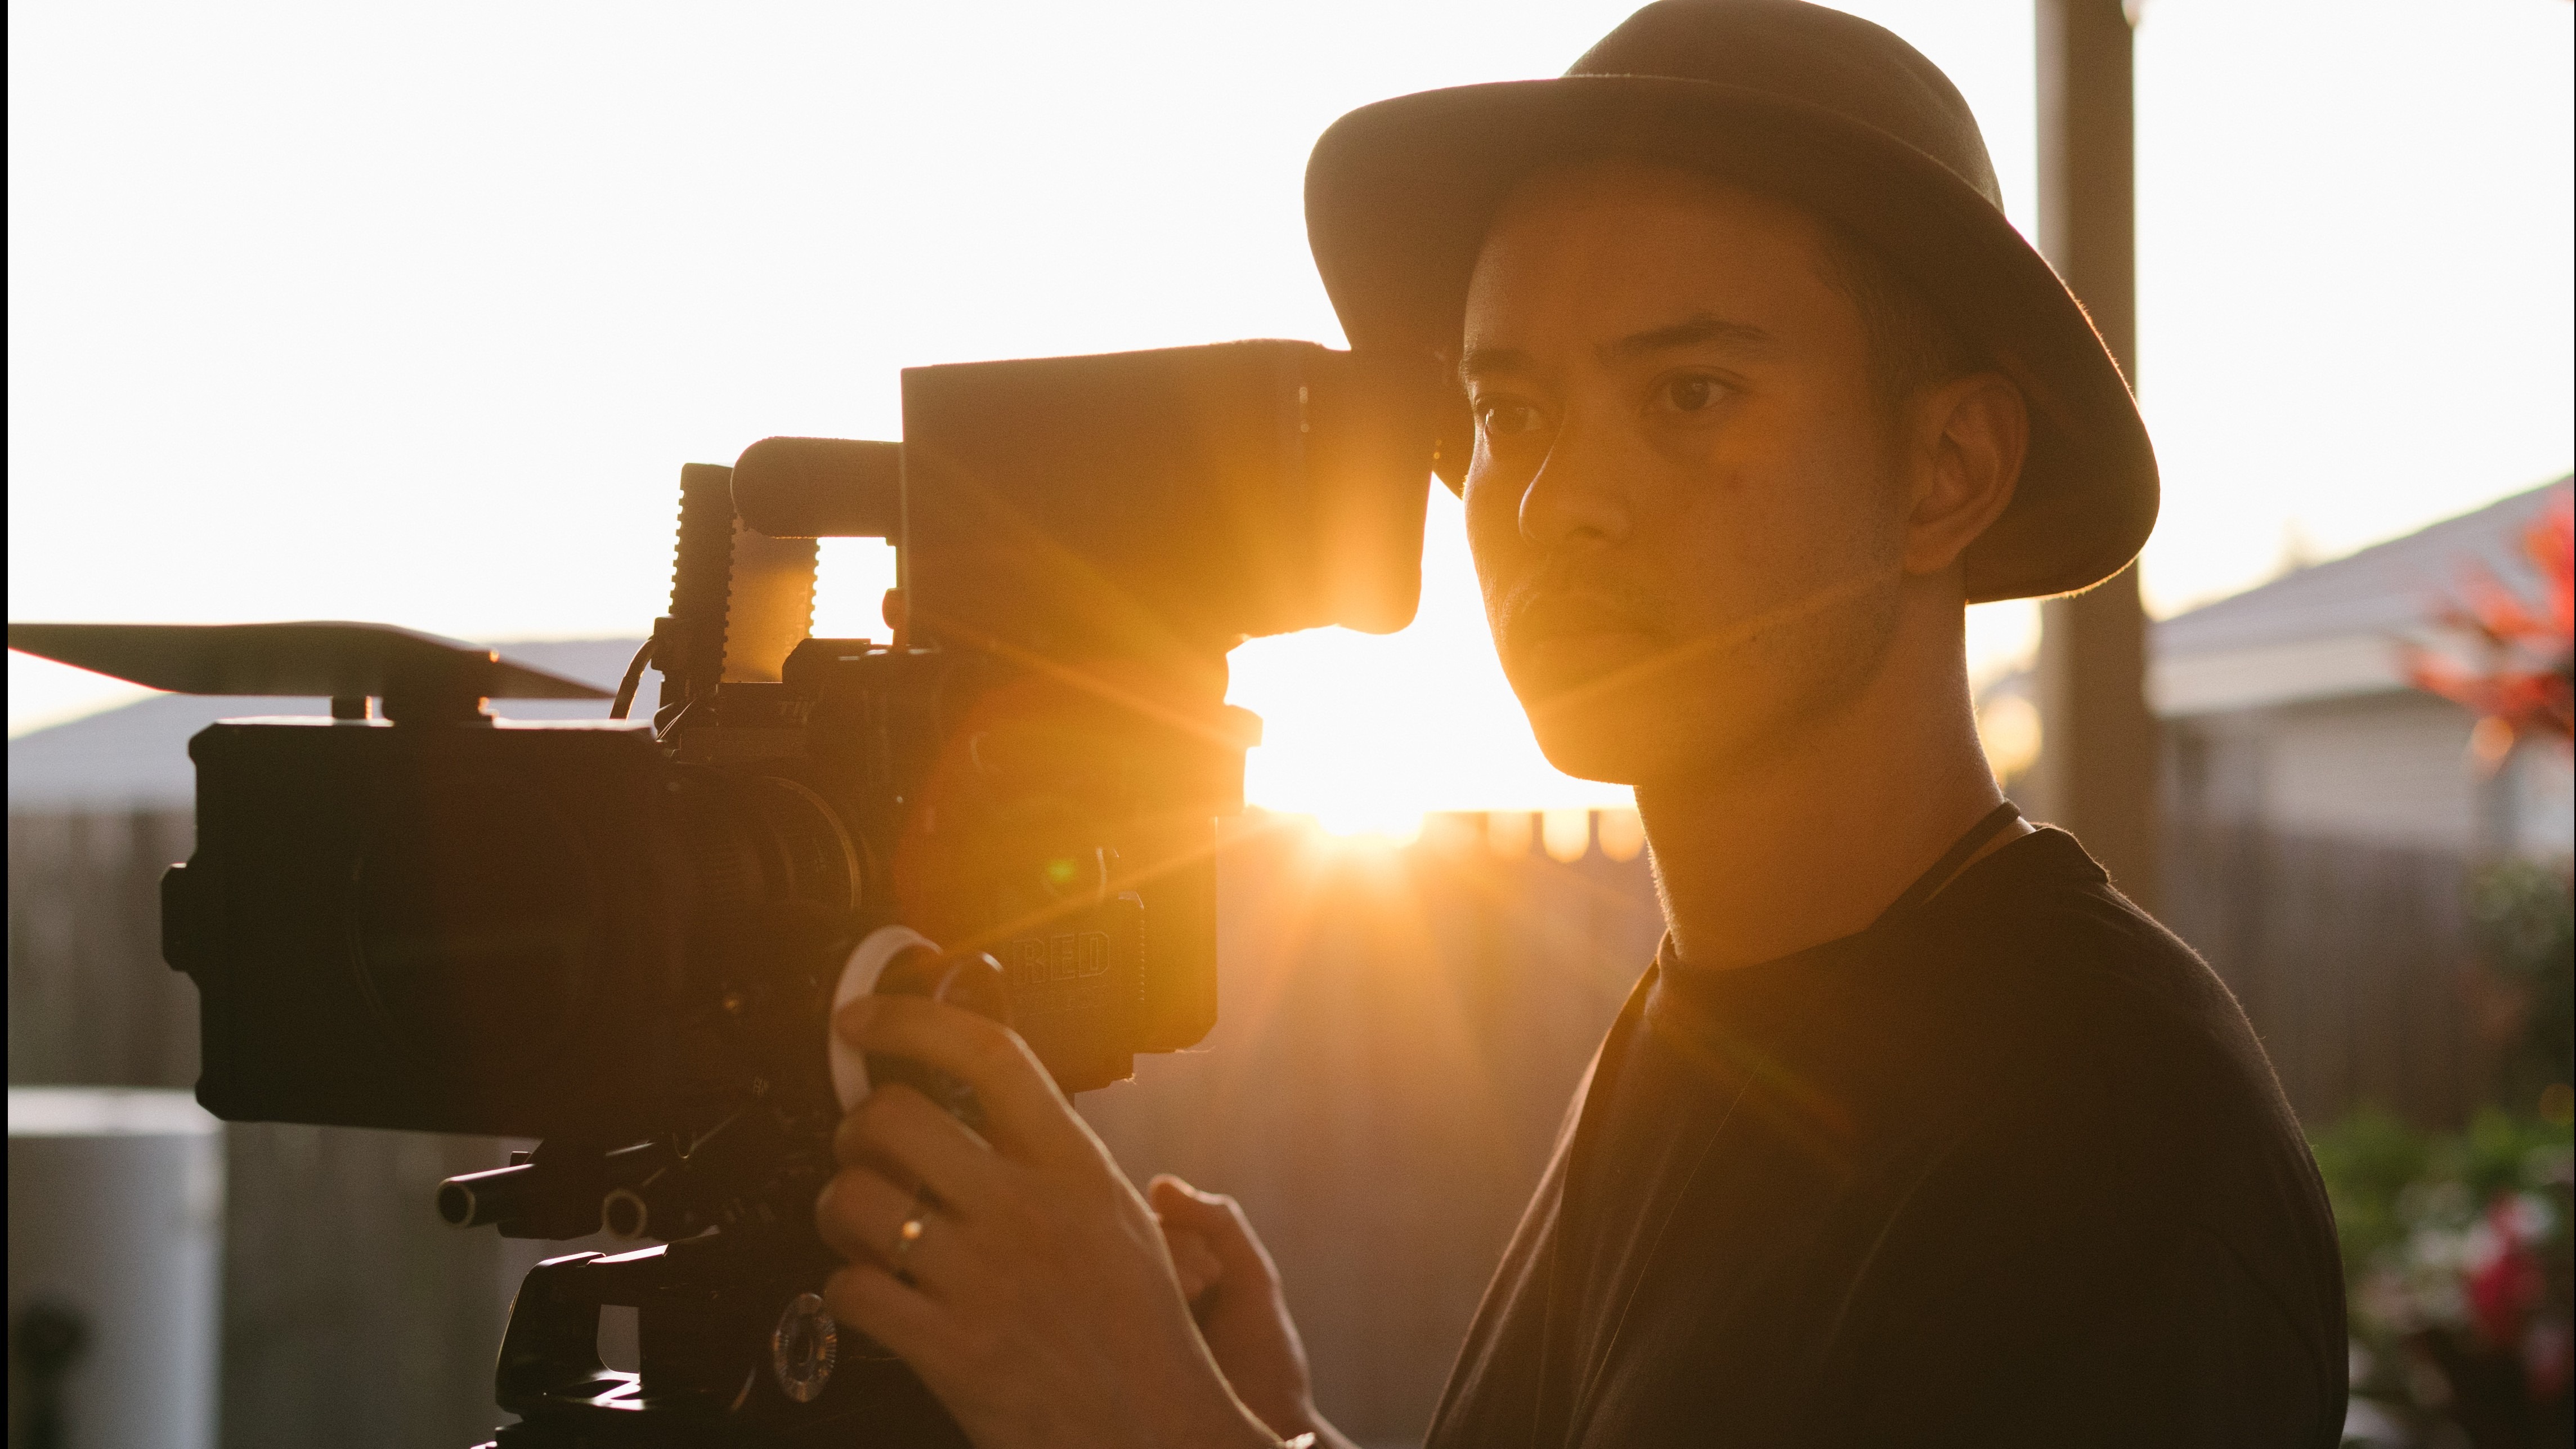 Award-Winning Brisbane Corporate Filmmaker Does Professional Online Commercials